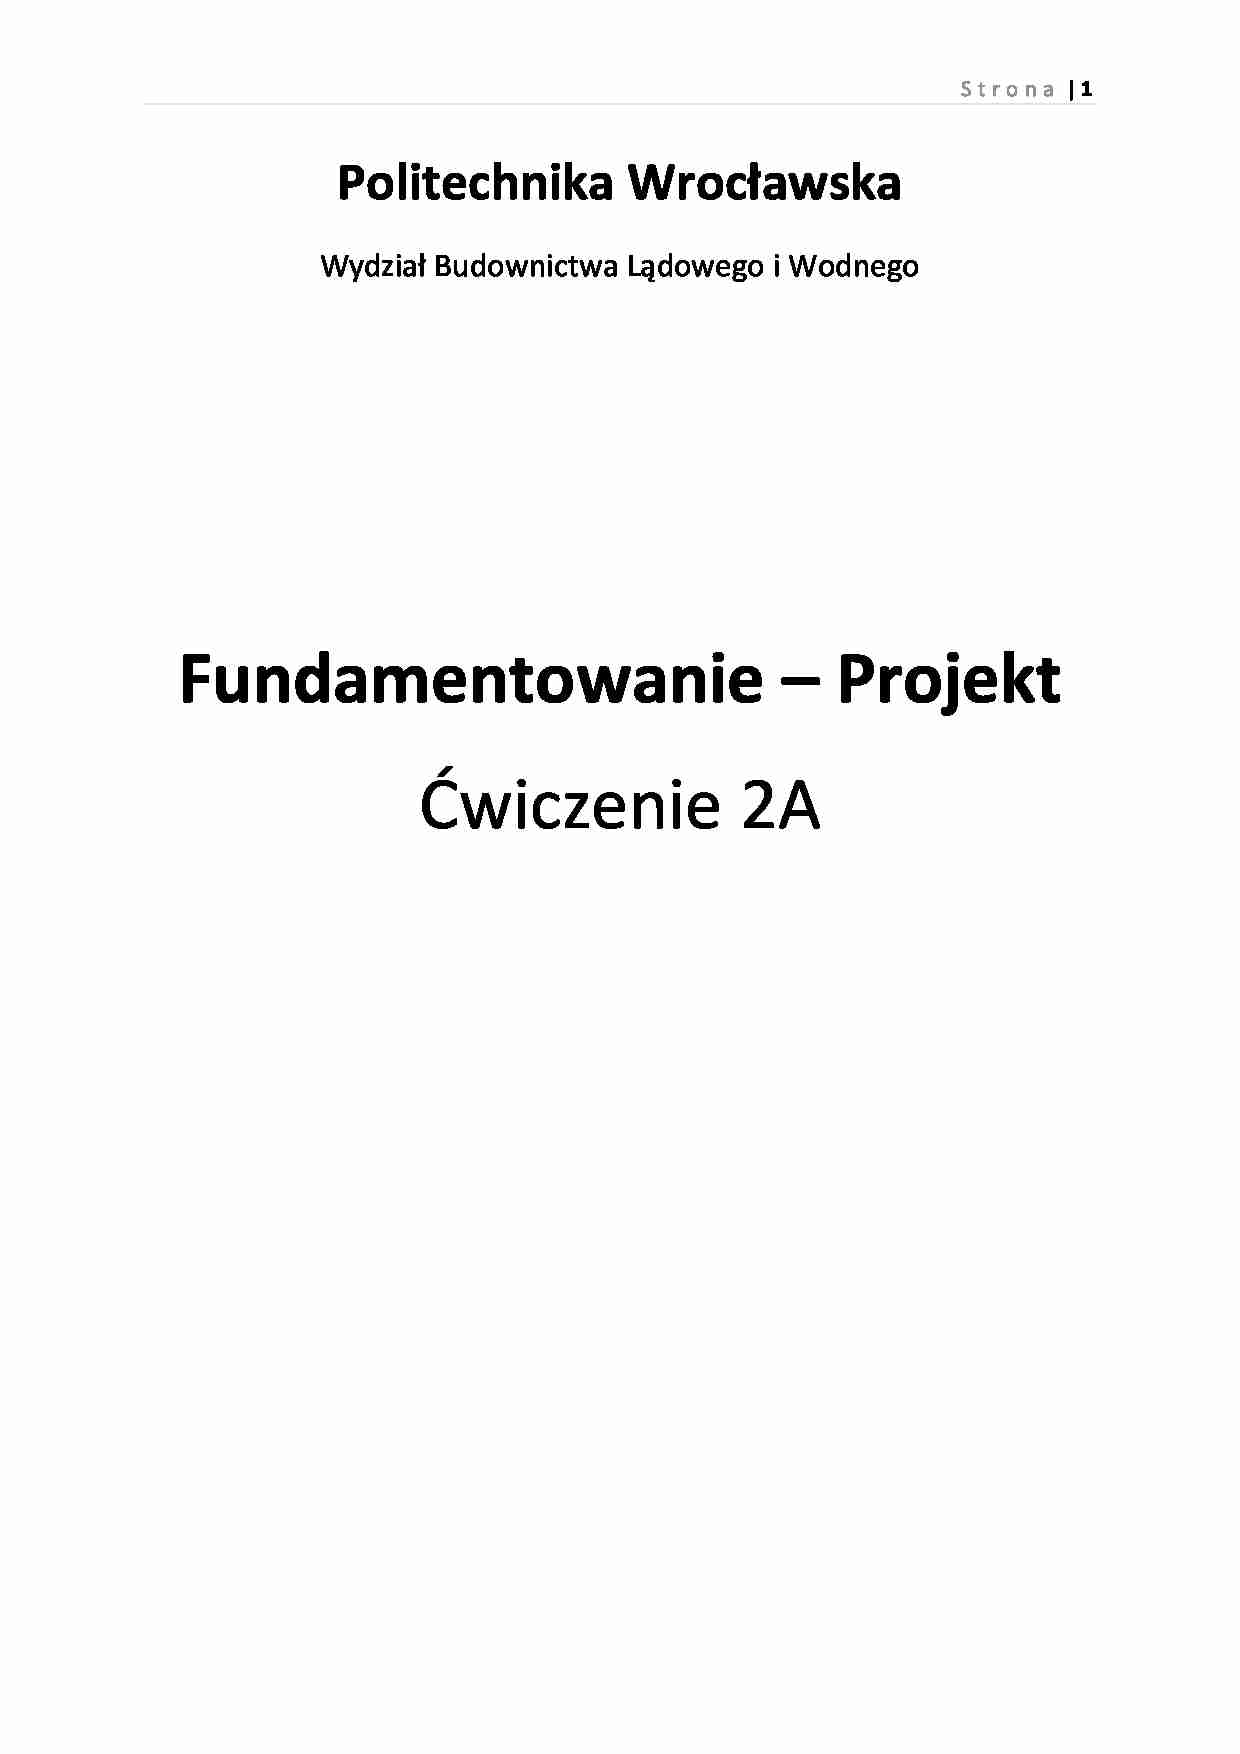 Fundamentowanie - Projekt-Projekt 2A - strona 1